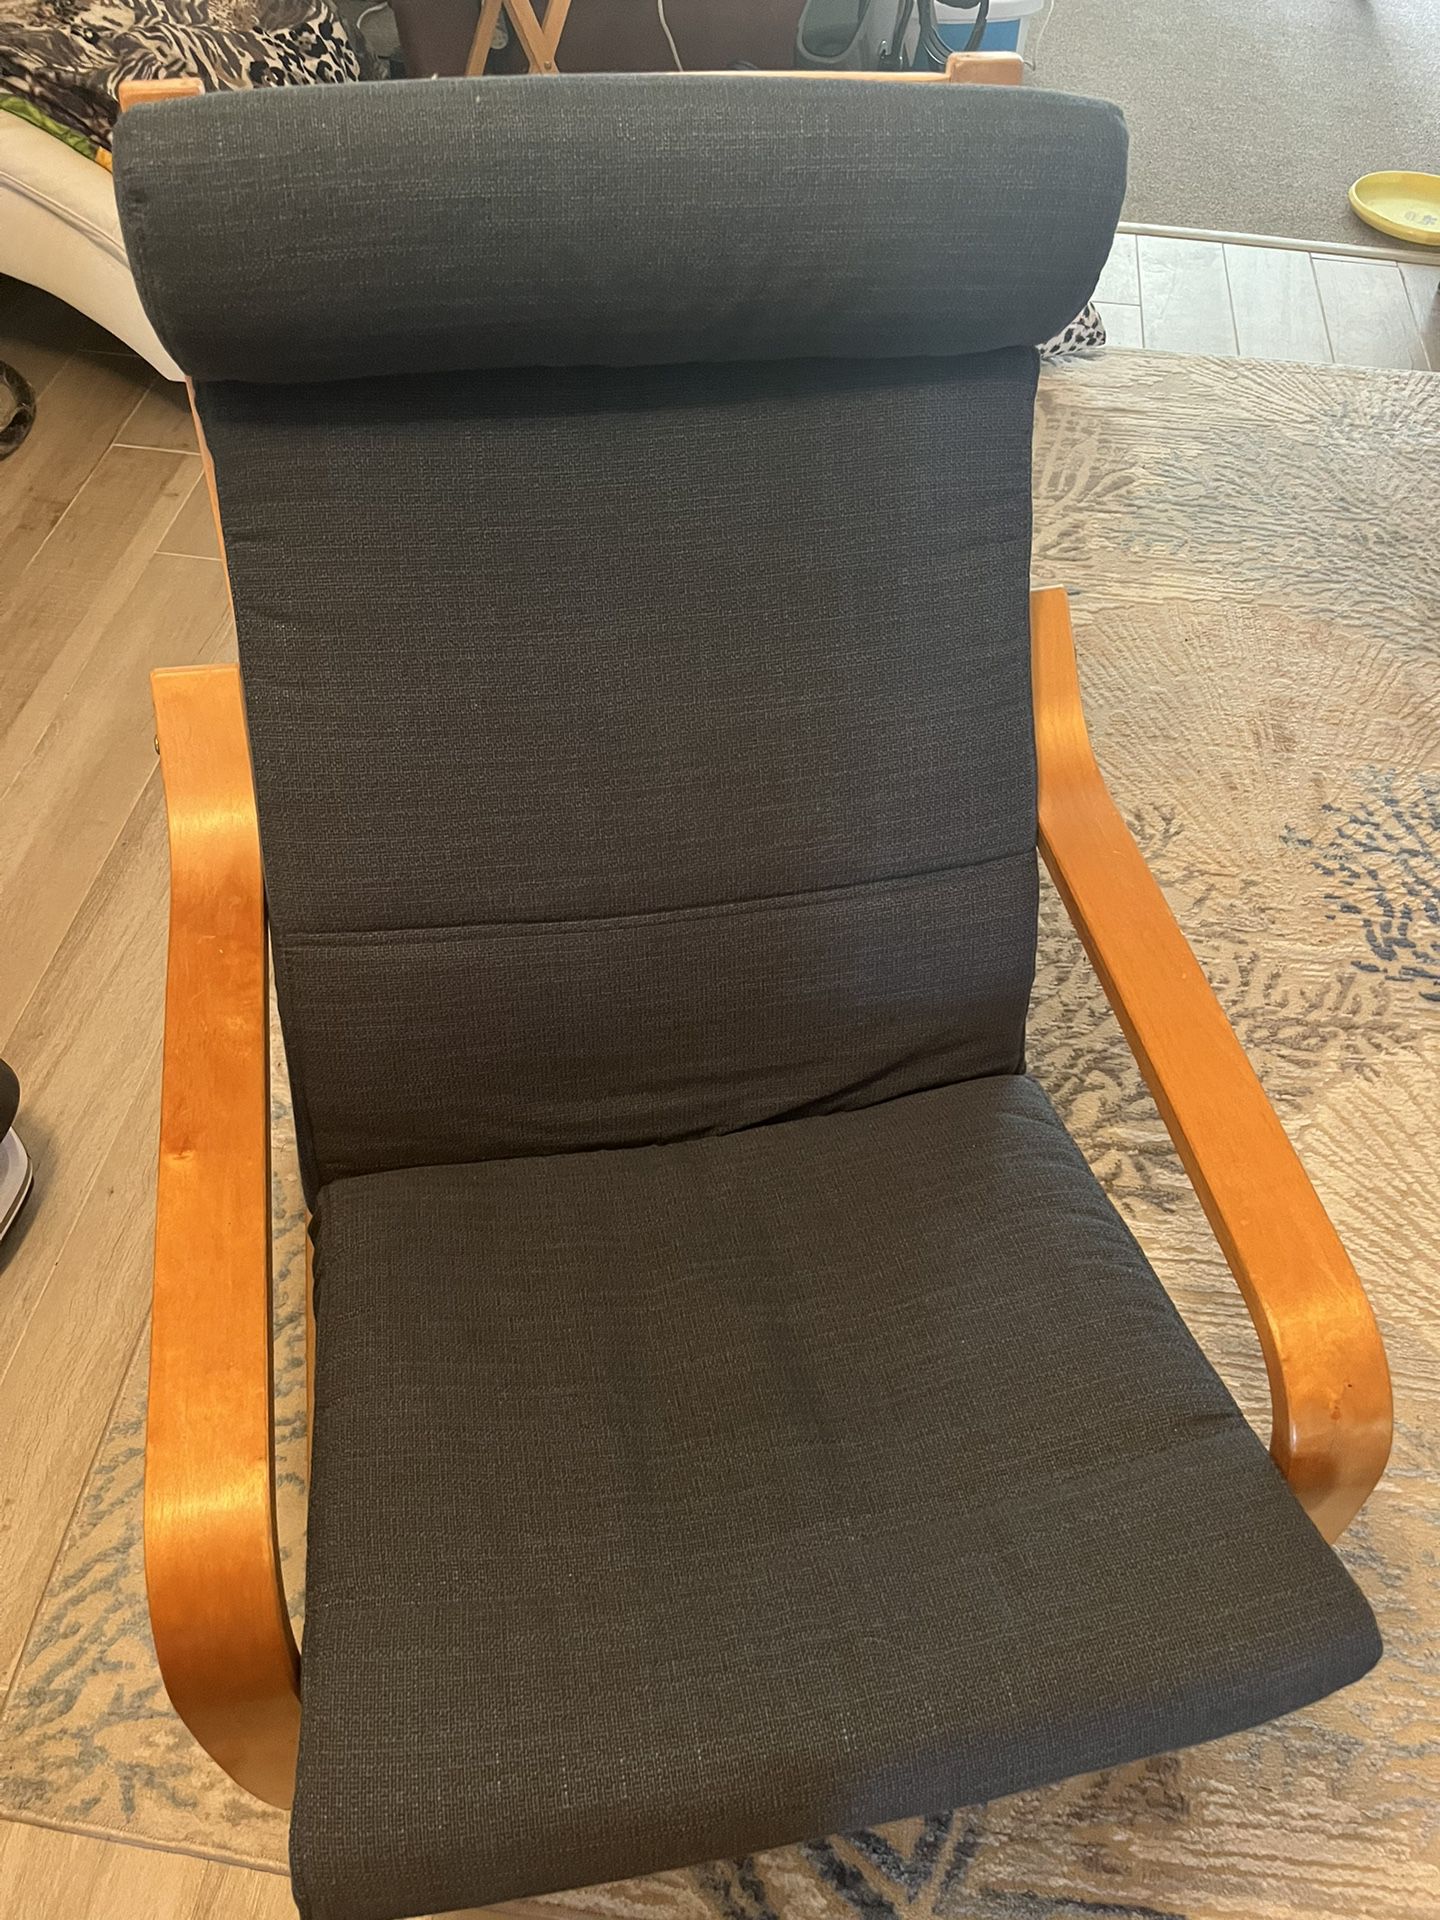 Ikea POANG Chair